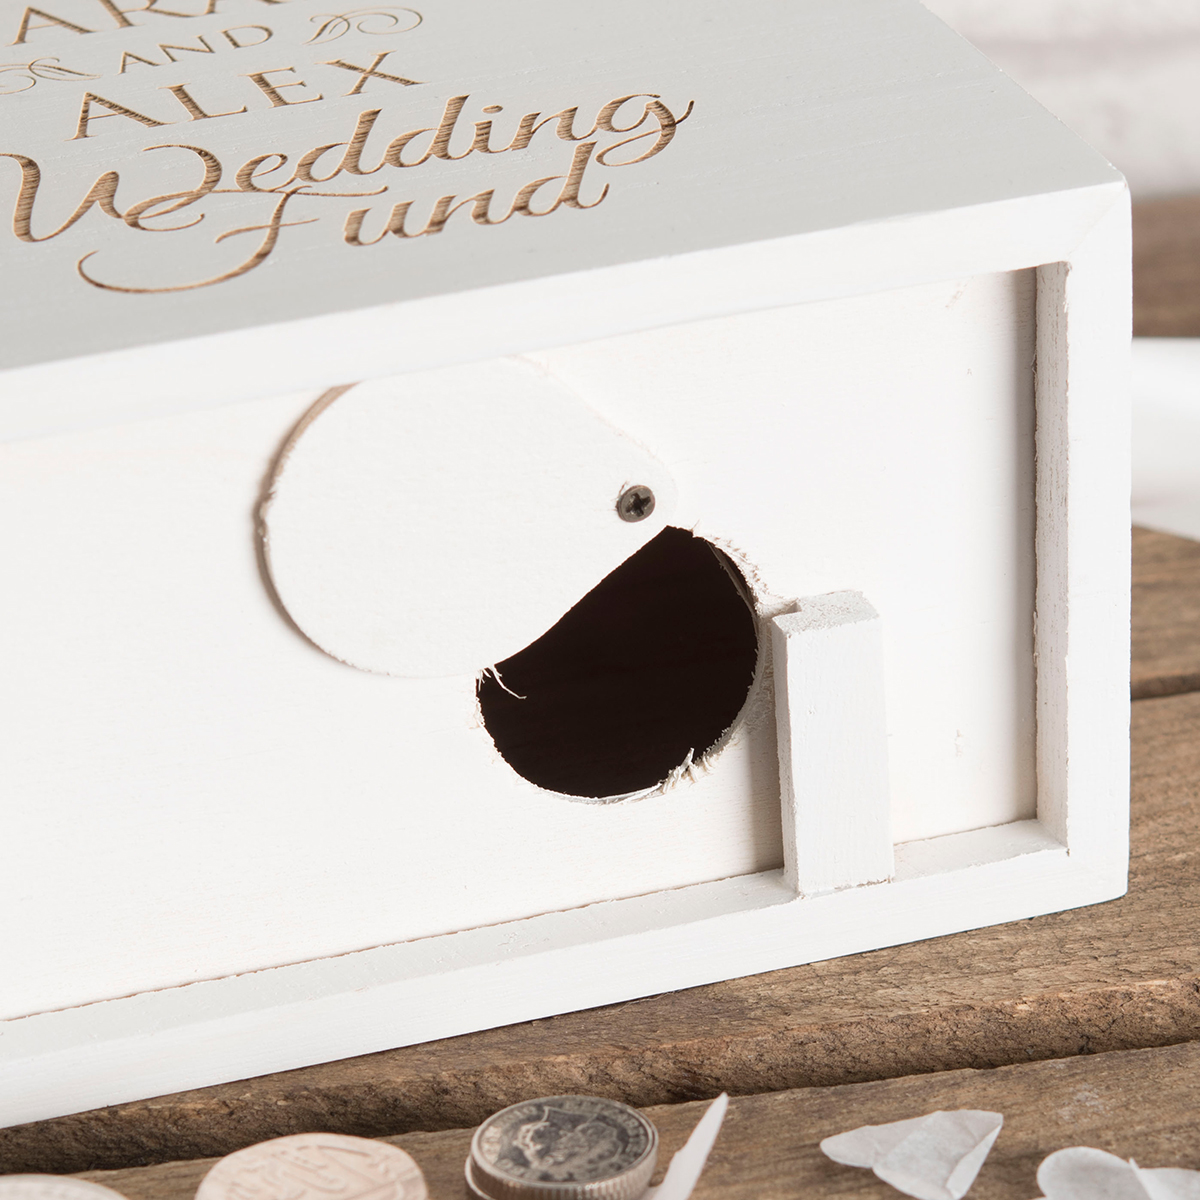 Personalised White Wooden Money Box - Wedding Fund